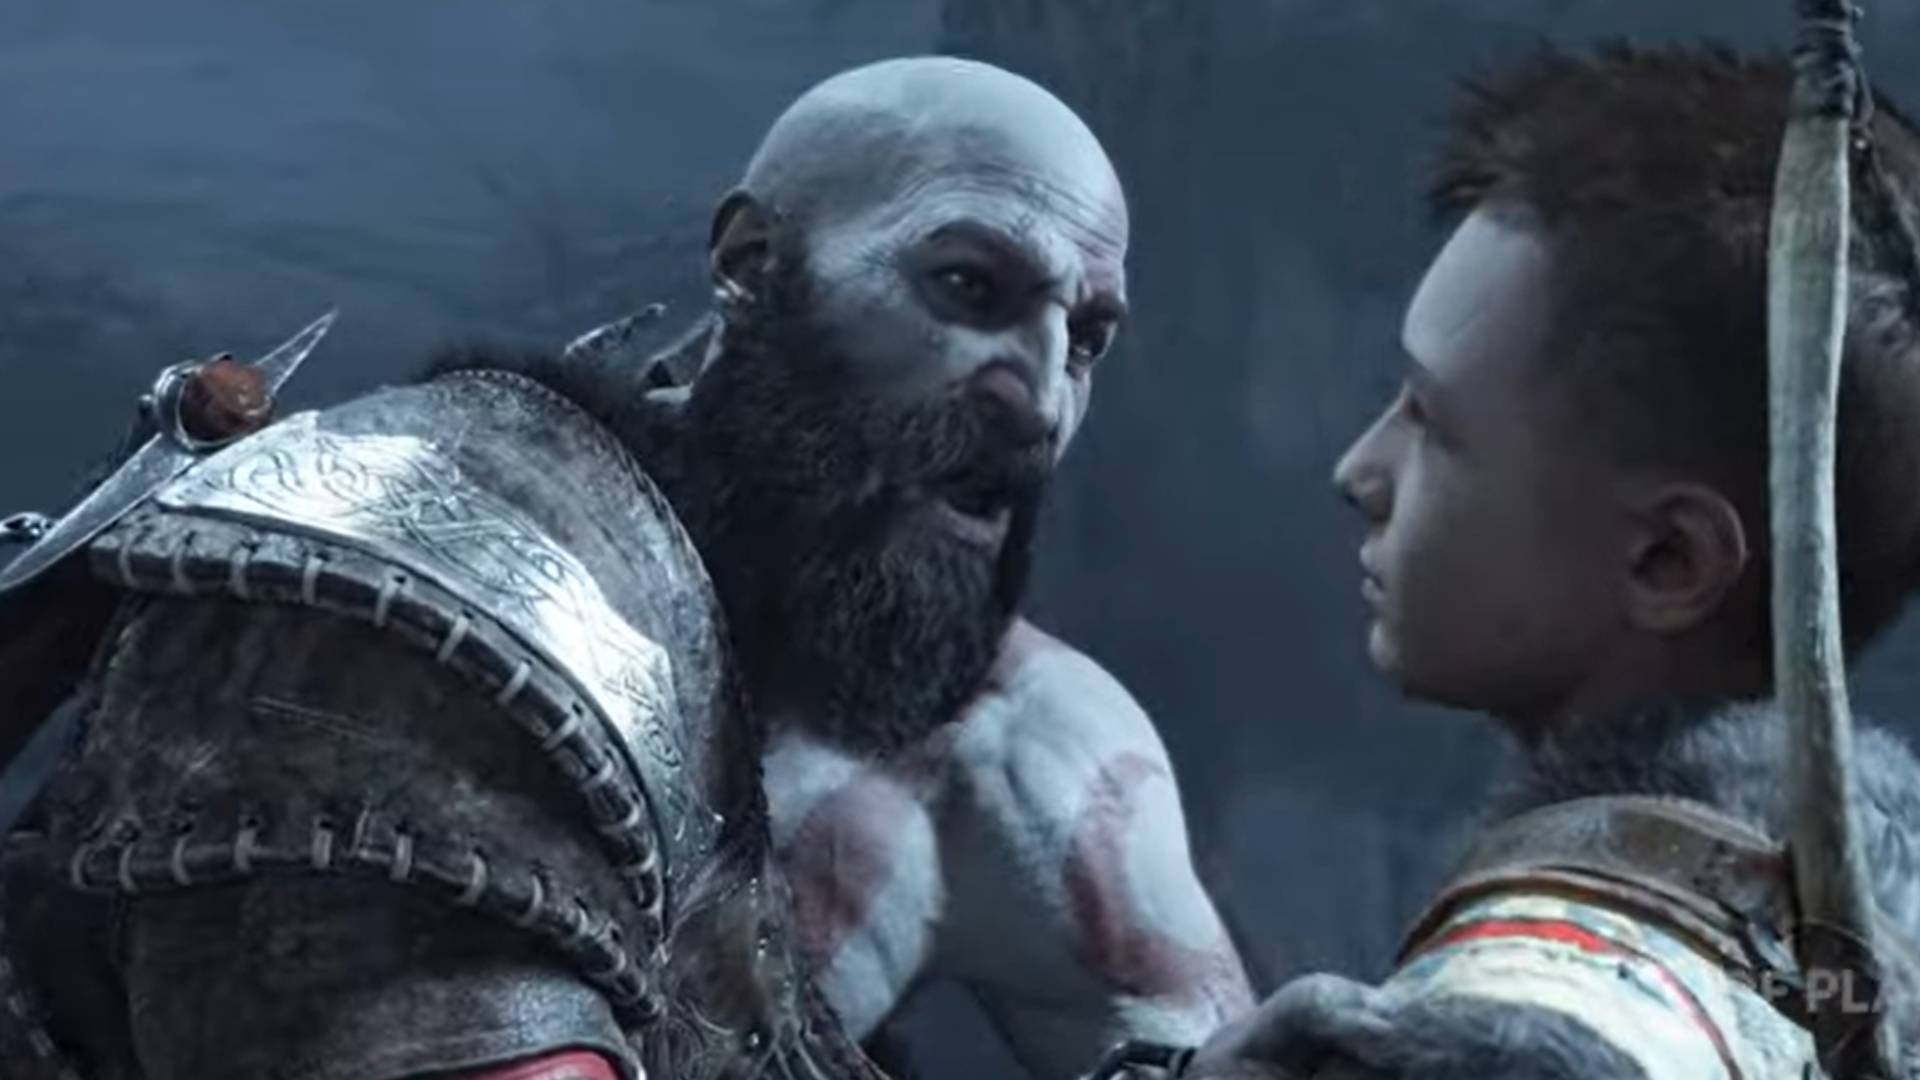 Games Inbox: Should you play God Of War 2018 before Ragnarök?